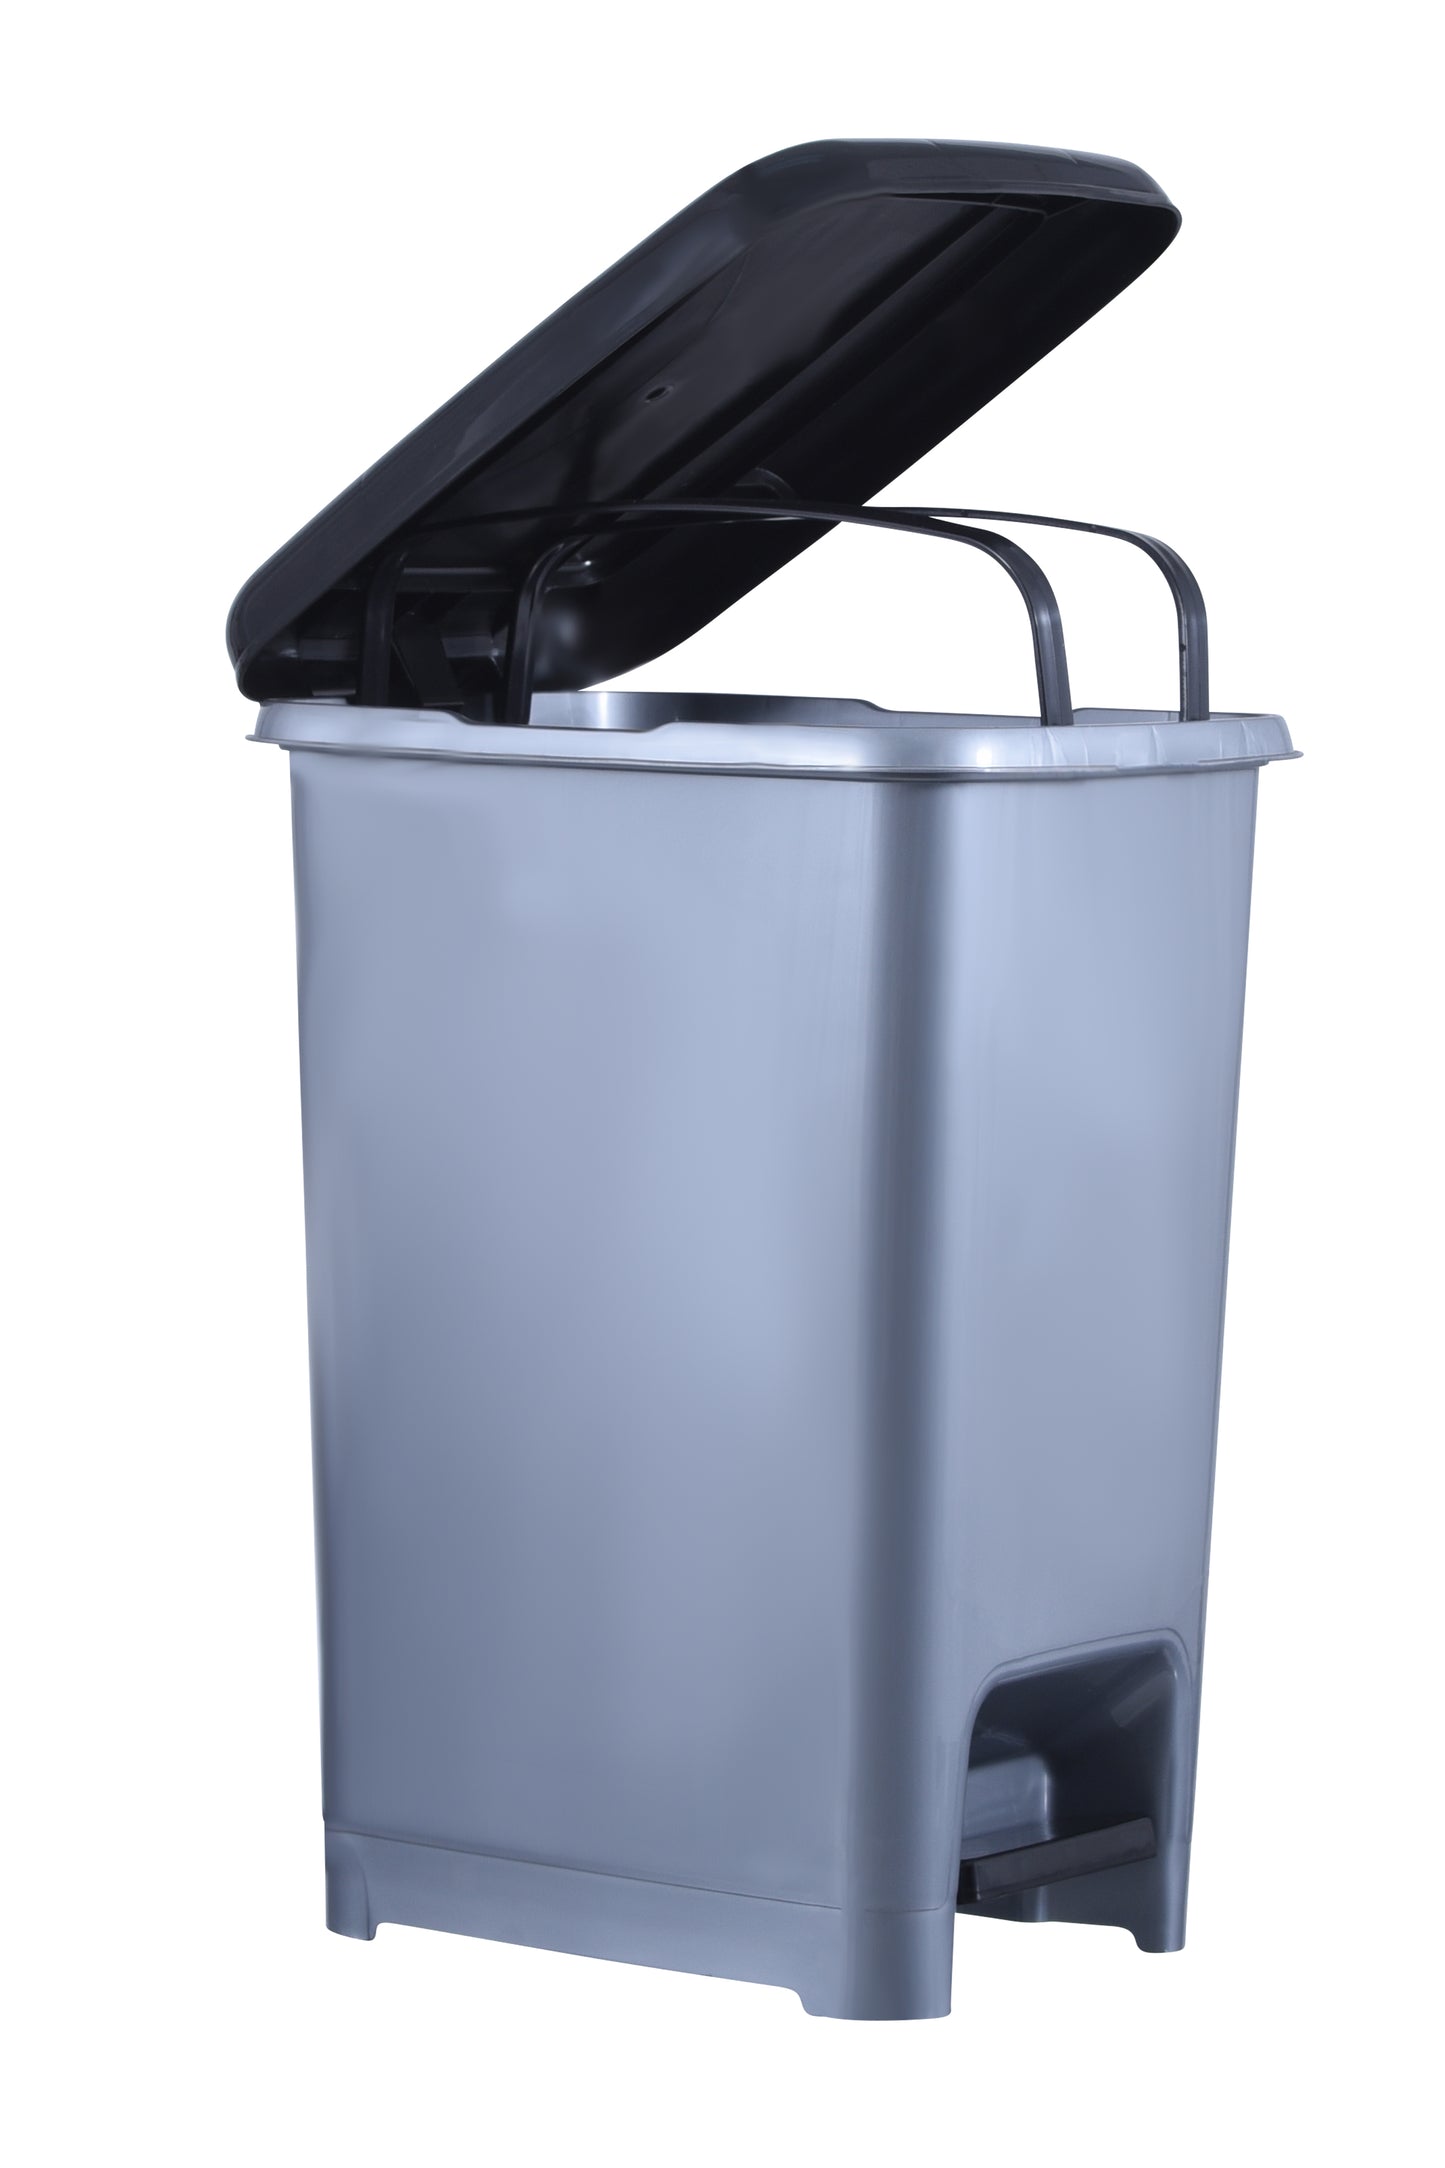 Slim Pedal Trash Can, 16 Qt - Grey/Black